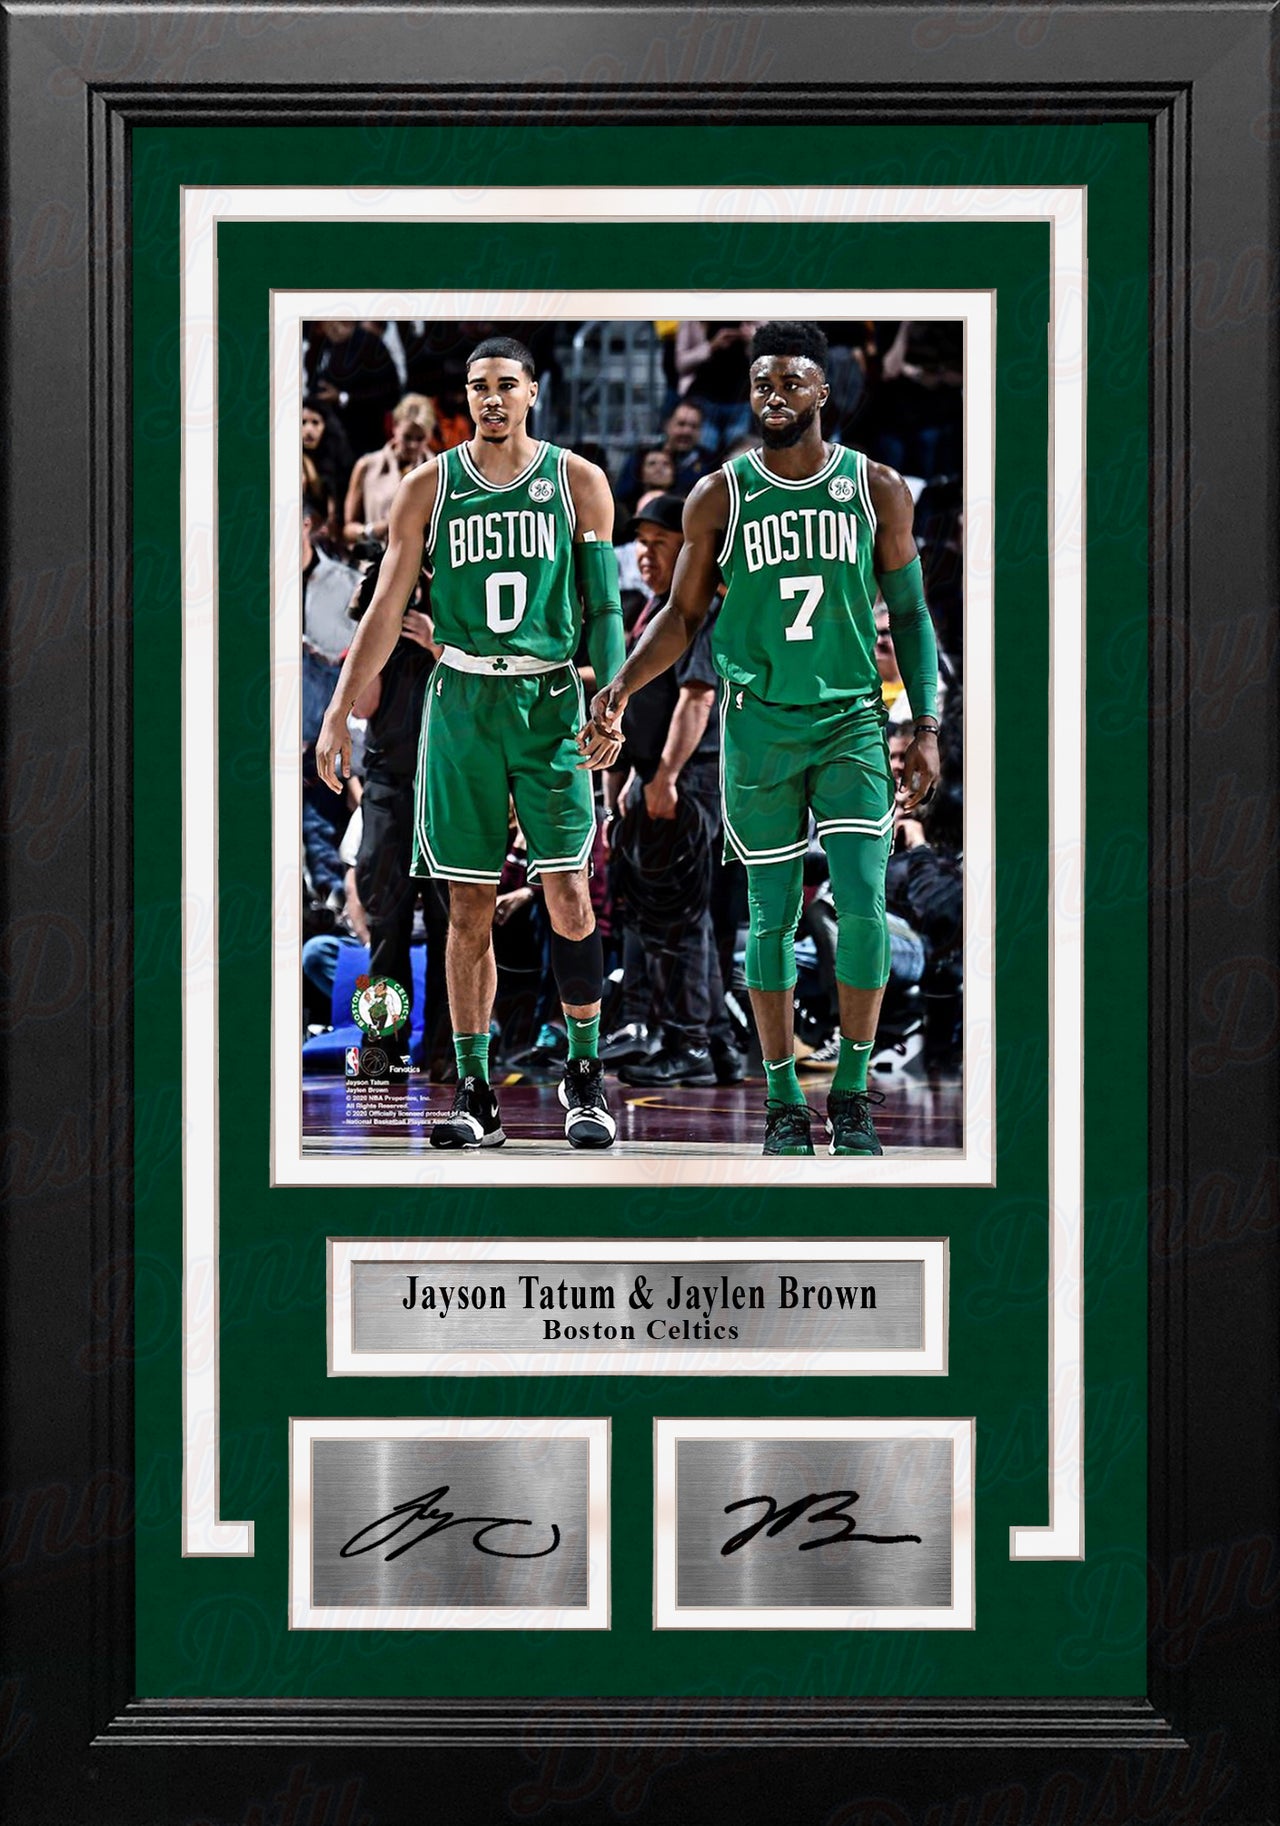 Jayson Tatum and Jaylen Brown Boston Celtics 8x10 Framed Basketball Photo with Engraved Autographs - Dynasty Sports & Framing 